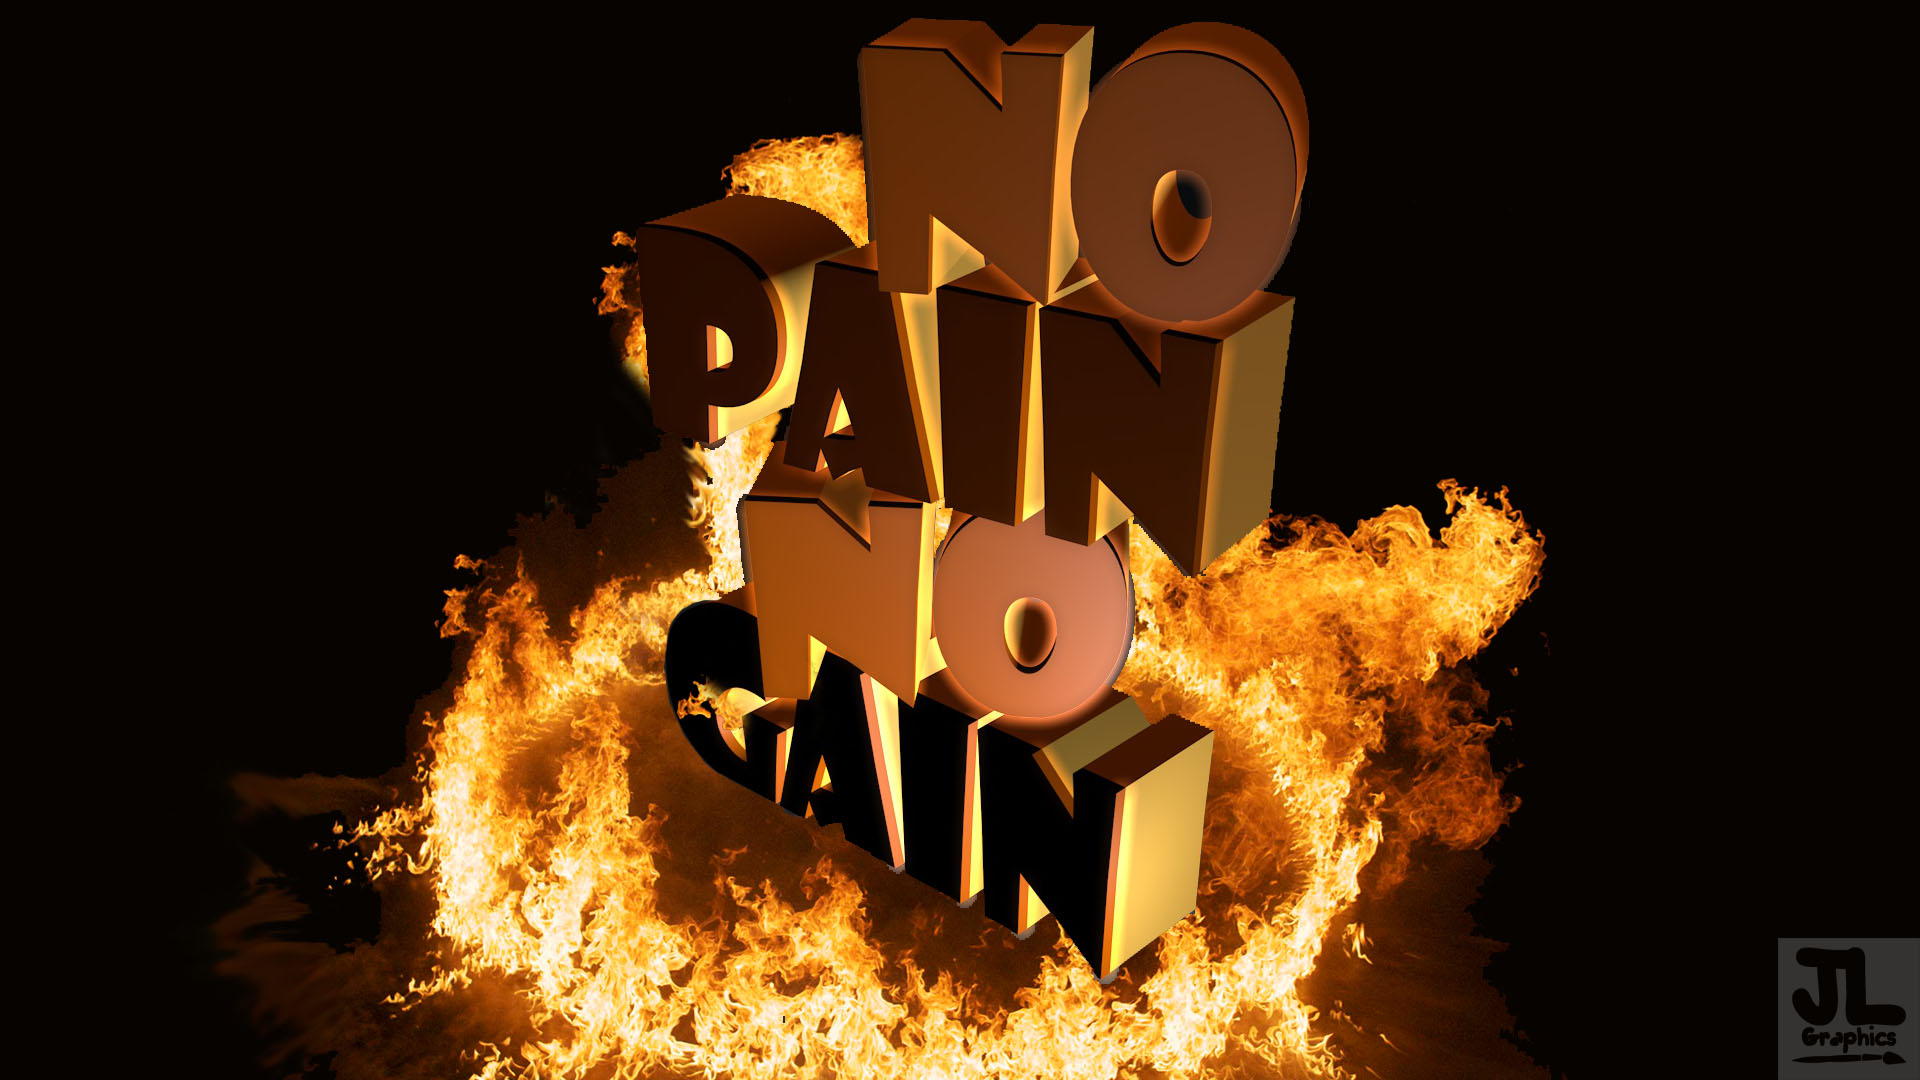 No Pain No Gain Wallpapers